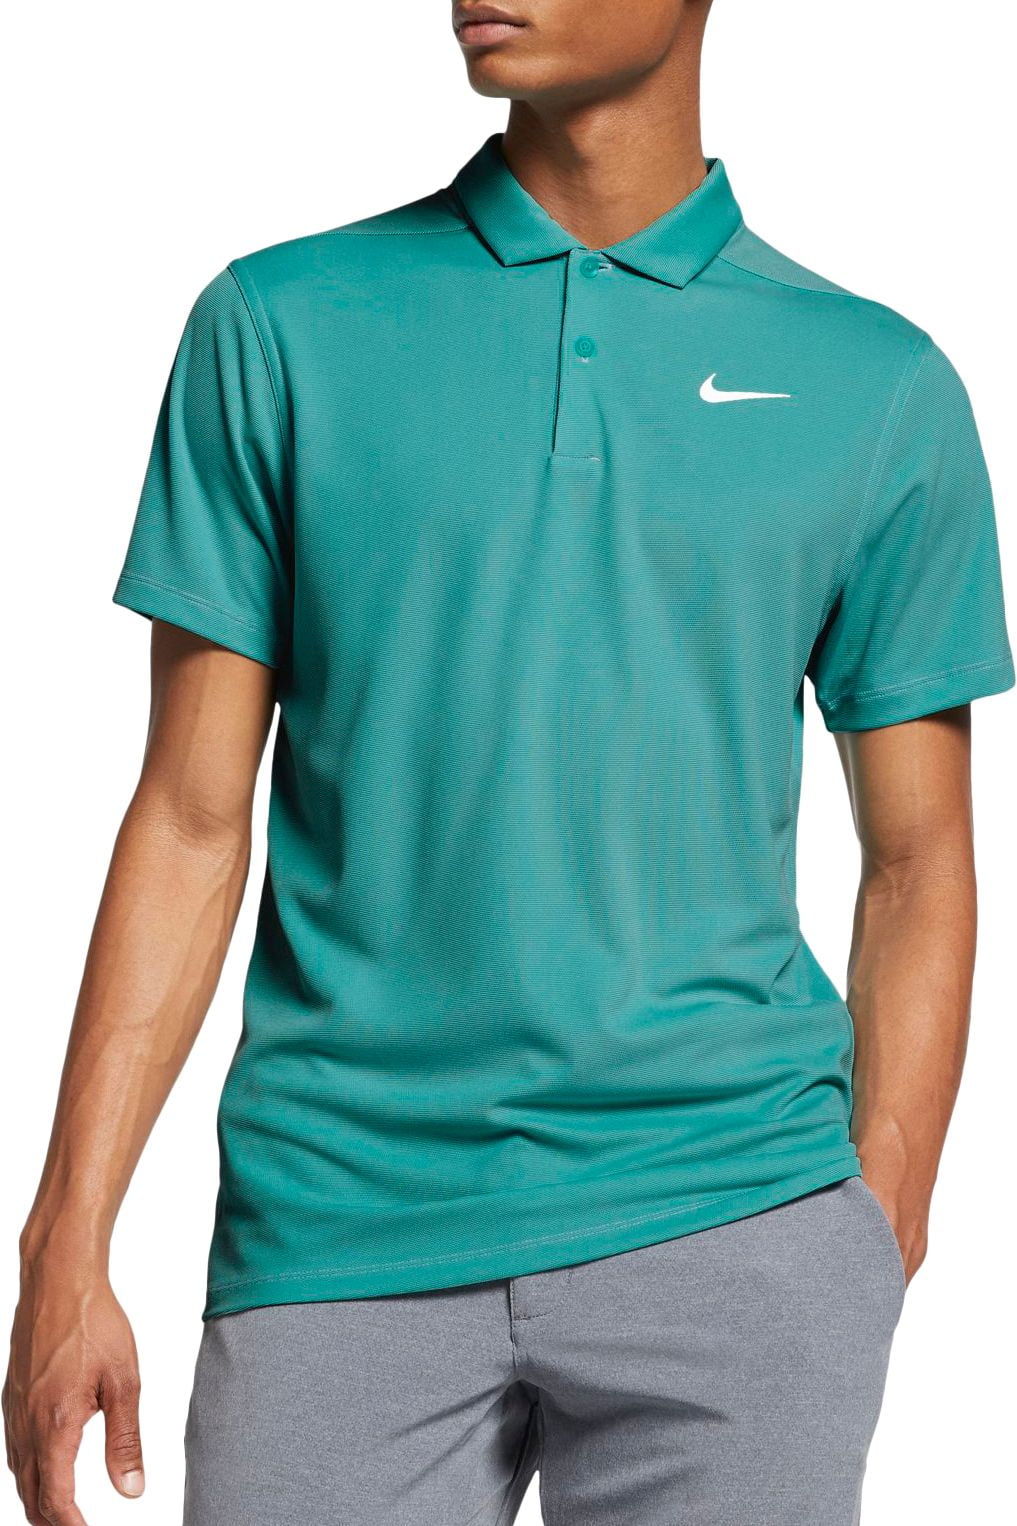 Nike Men's Victory Texture Golf Polo - Walmart.com